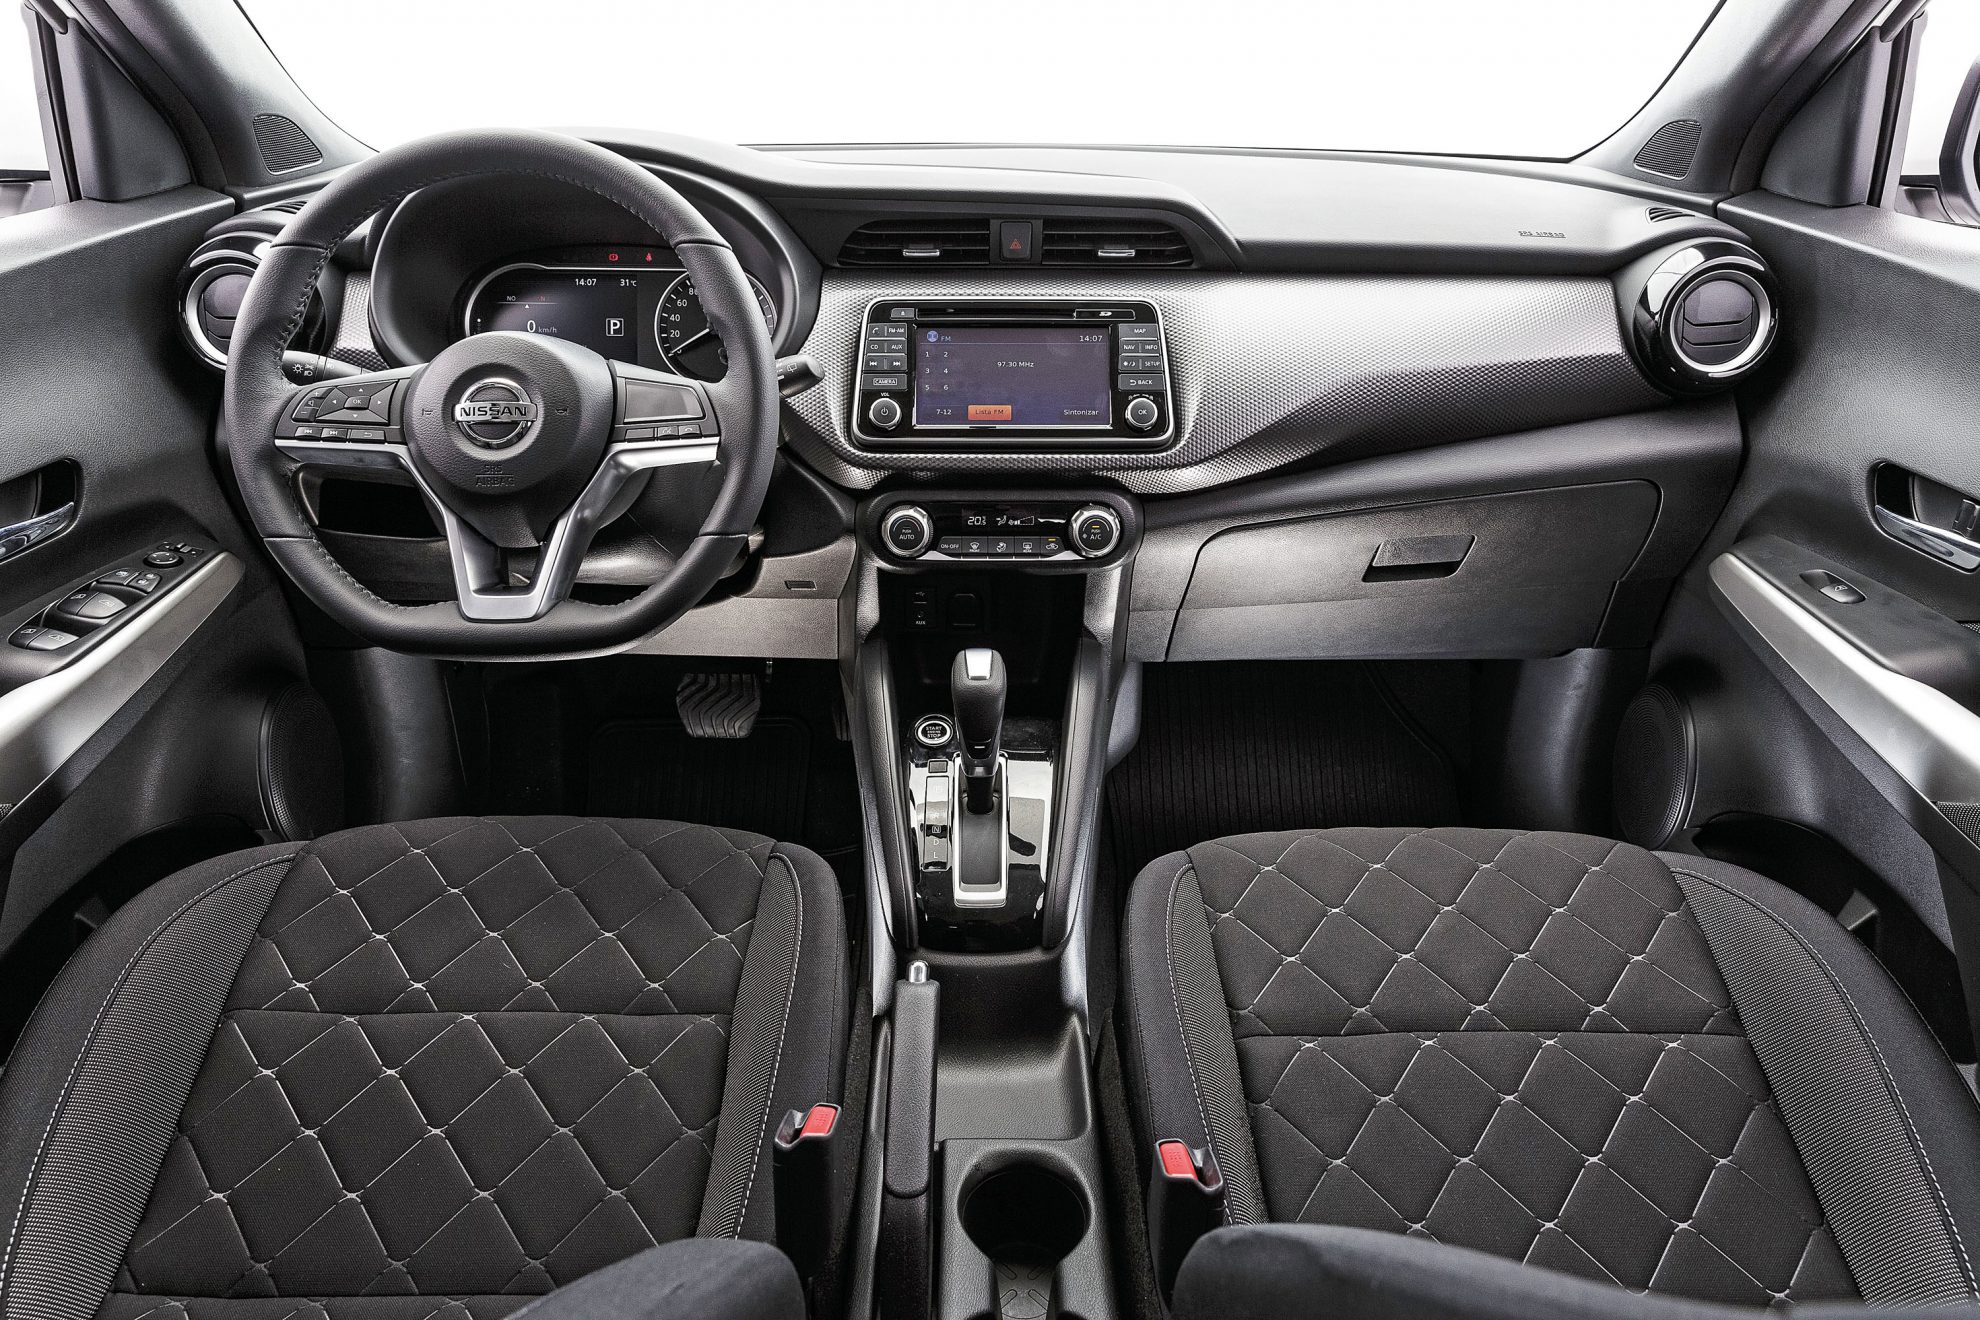 Nissan Kicks interior